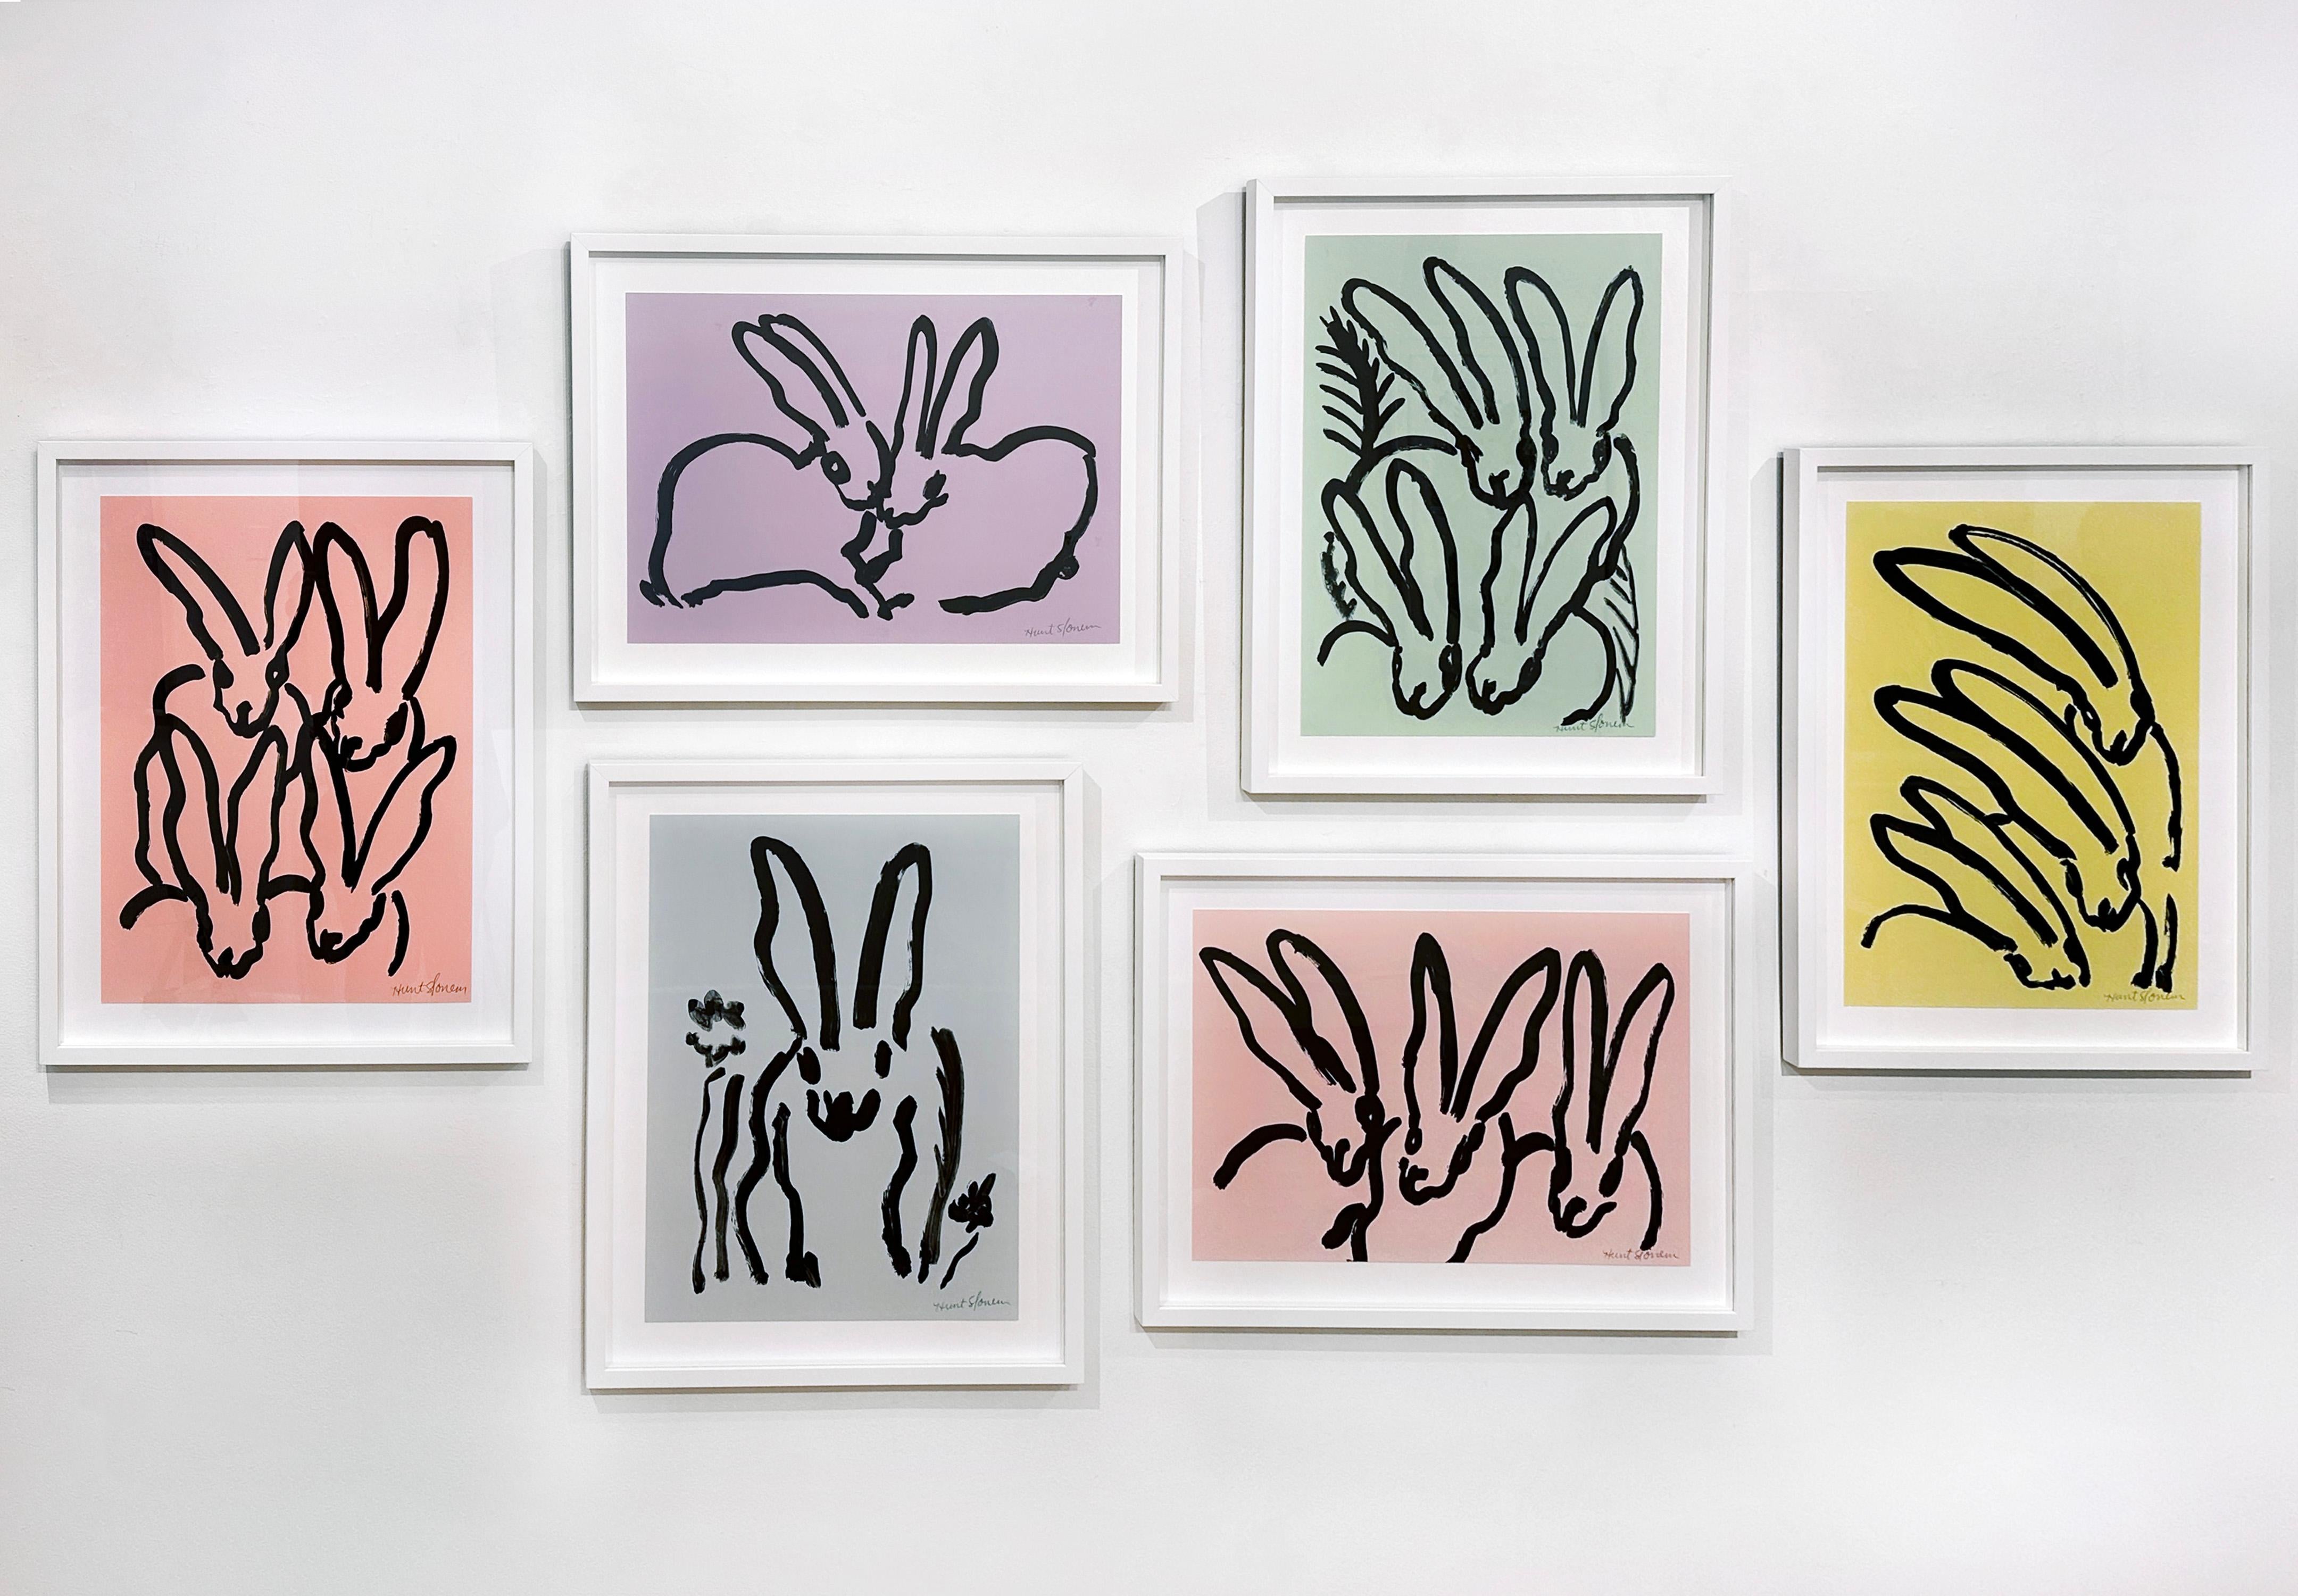 Artist:  Slonem, Hunt
Title:  Lilac Bunnies
Series:  Bunnies
Date:  2017
Medium:  Lithograph on Paper
Unframed Dimensions:  16